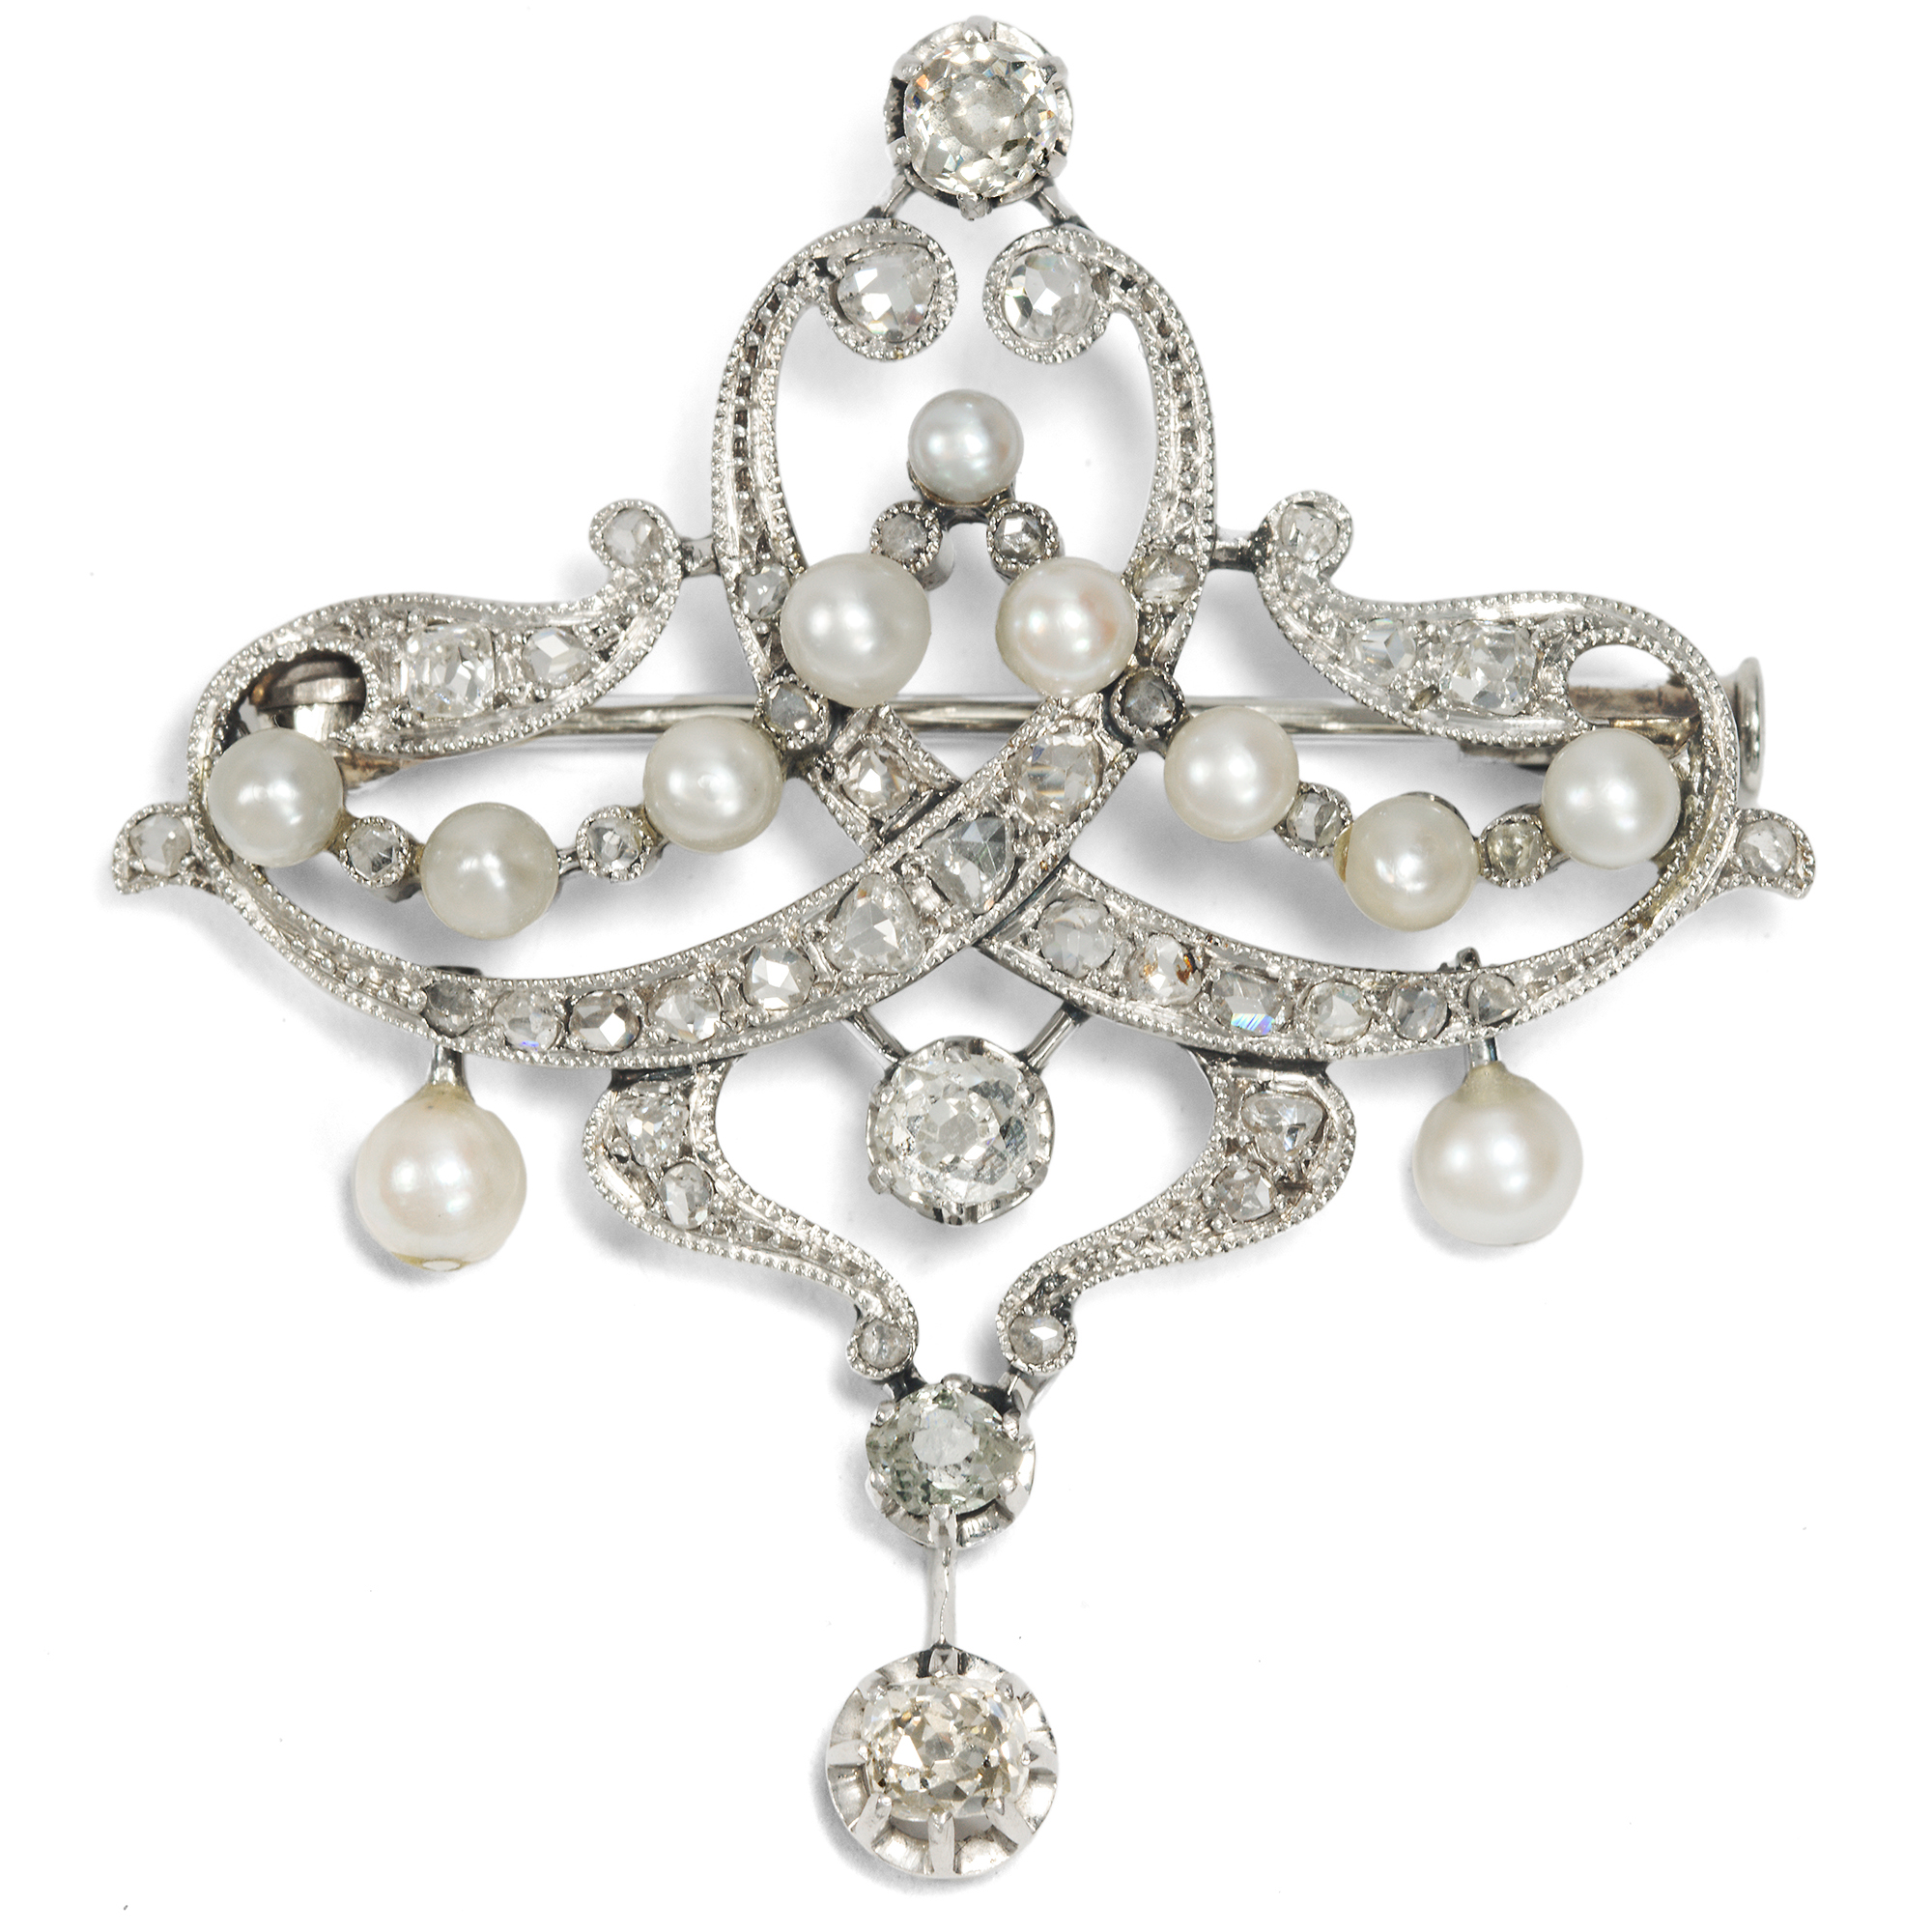 Antique Diamond and Pearl Belle Époque Brooch, c. 1905